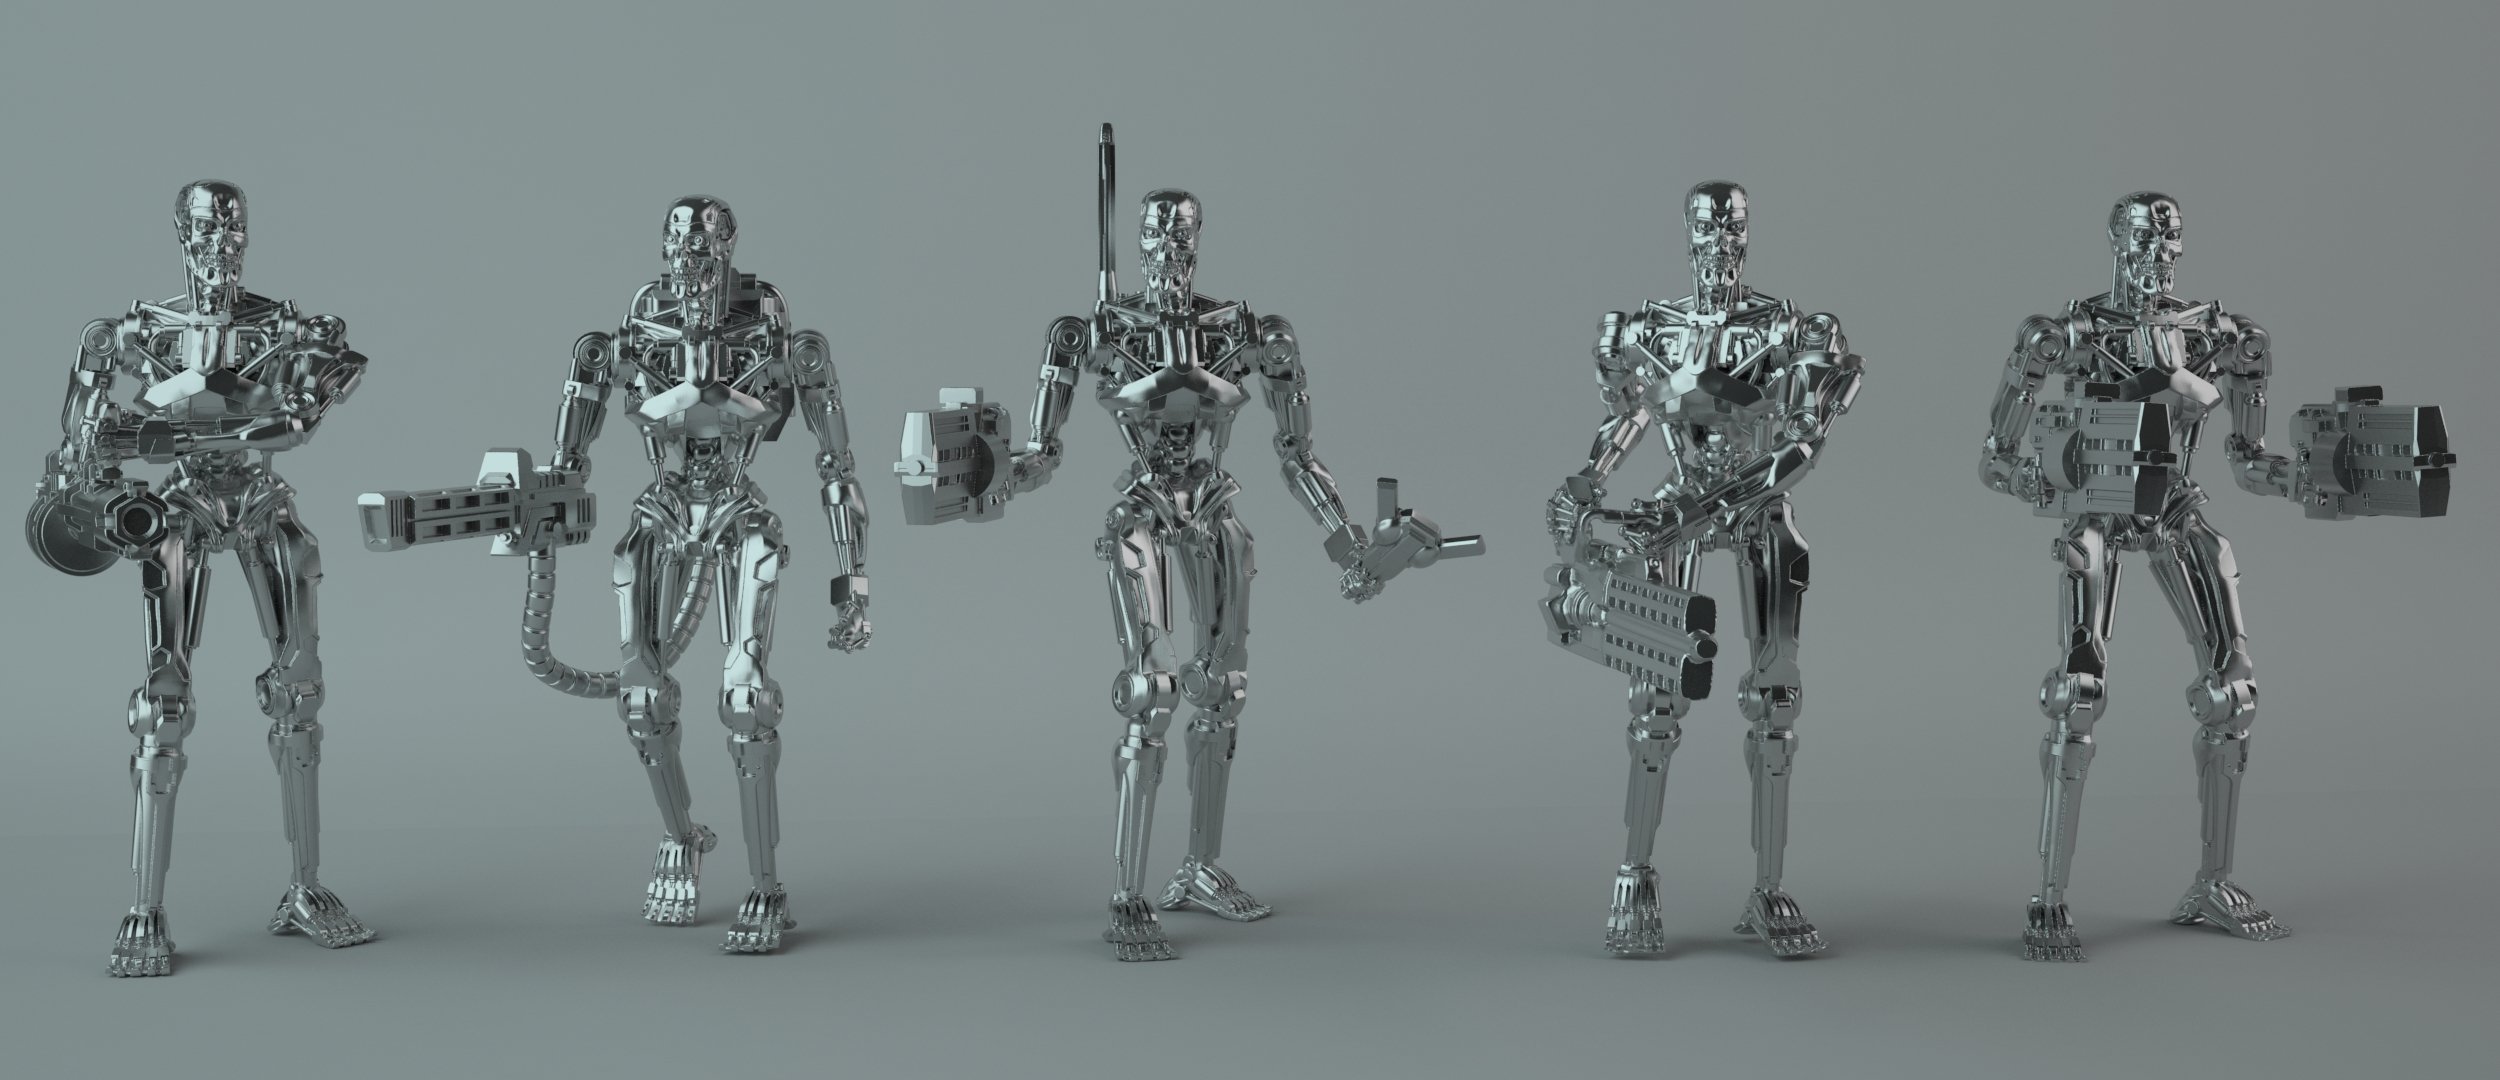 terminator, Genisys, Sci fi, Futuristic, Action, Fighting, Warrior, Robot, Cyborg, 1genisys Wallpaper